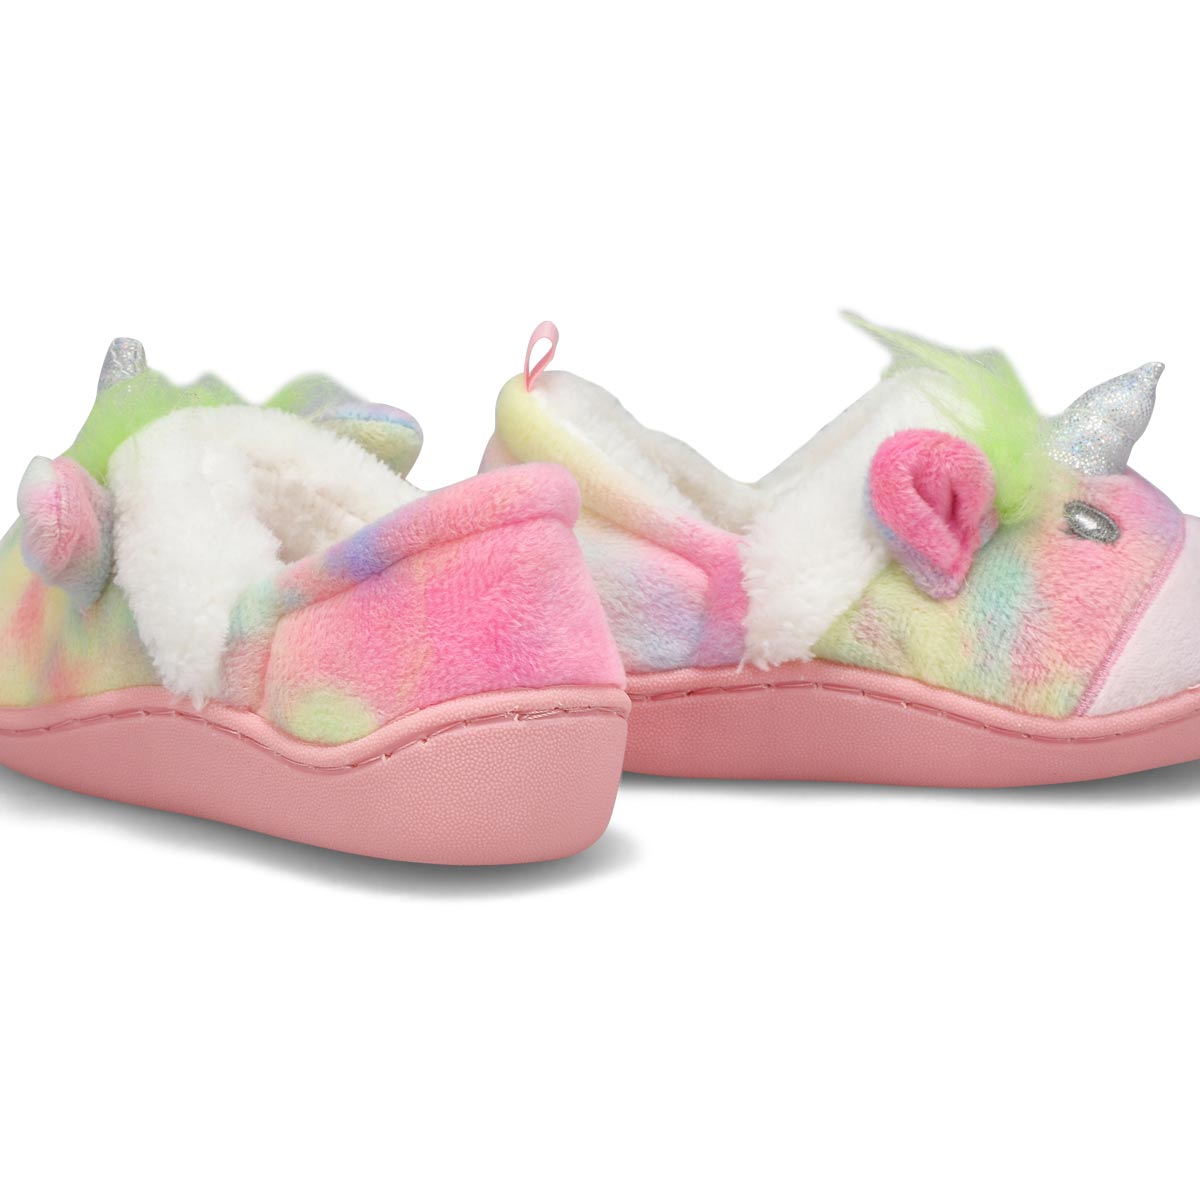 Infants' G Unicorn-TD Plush Slipper - Rainbow